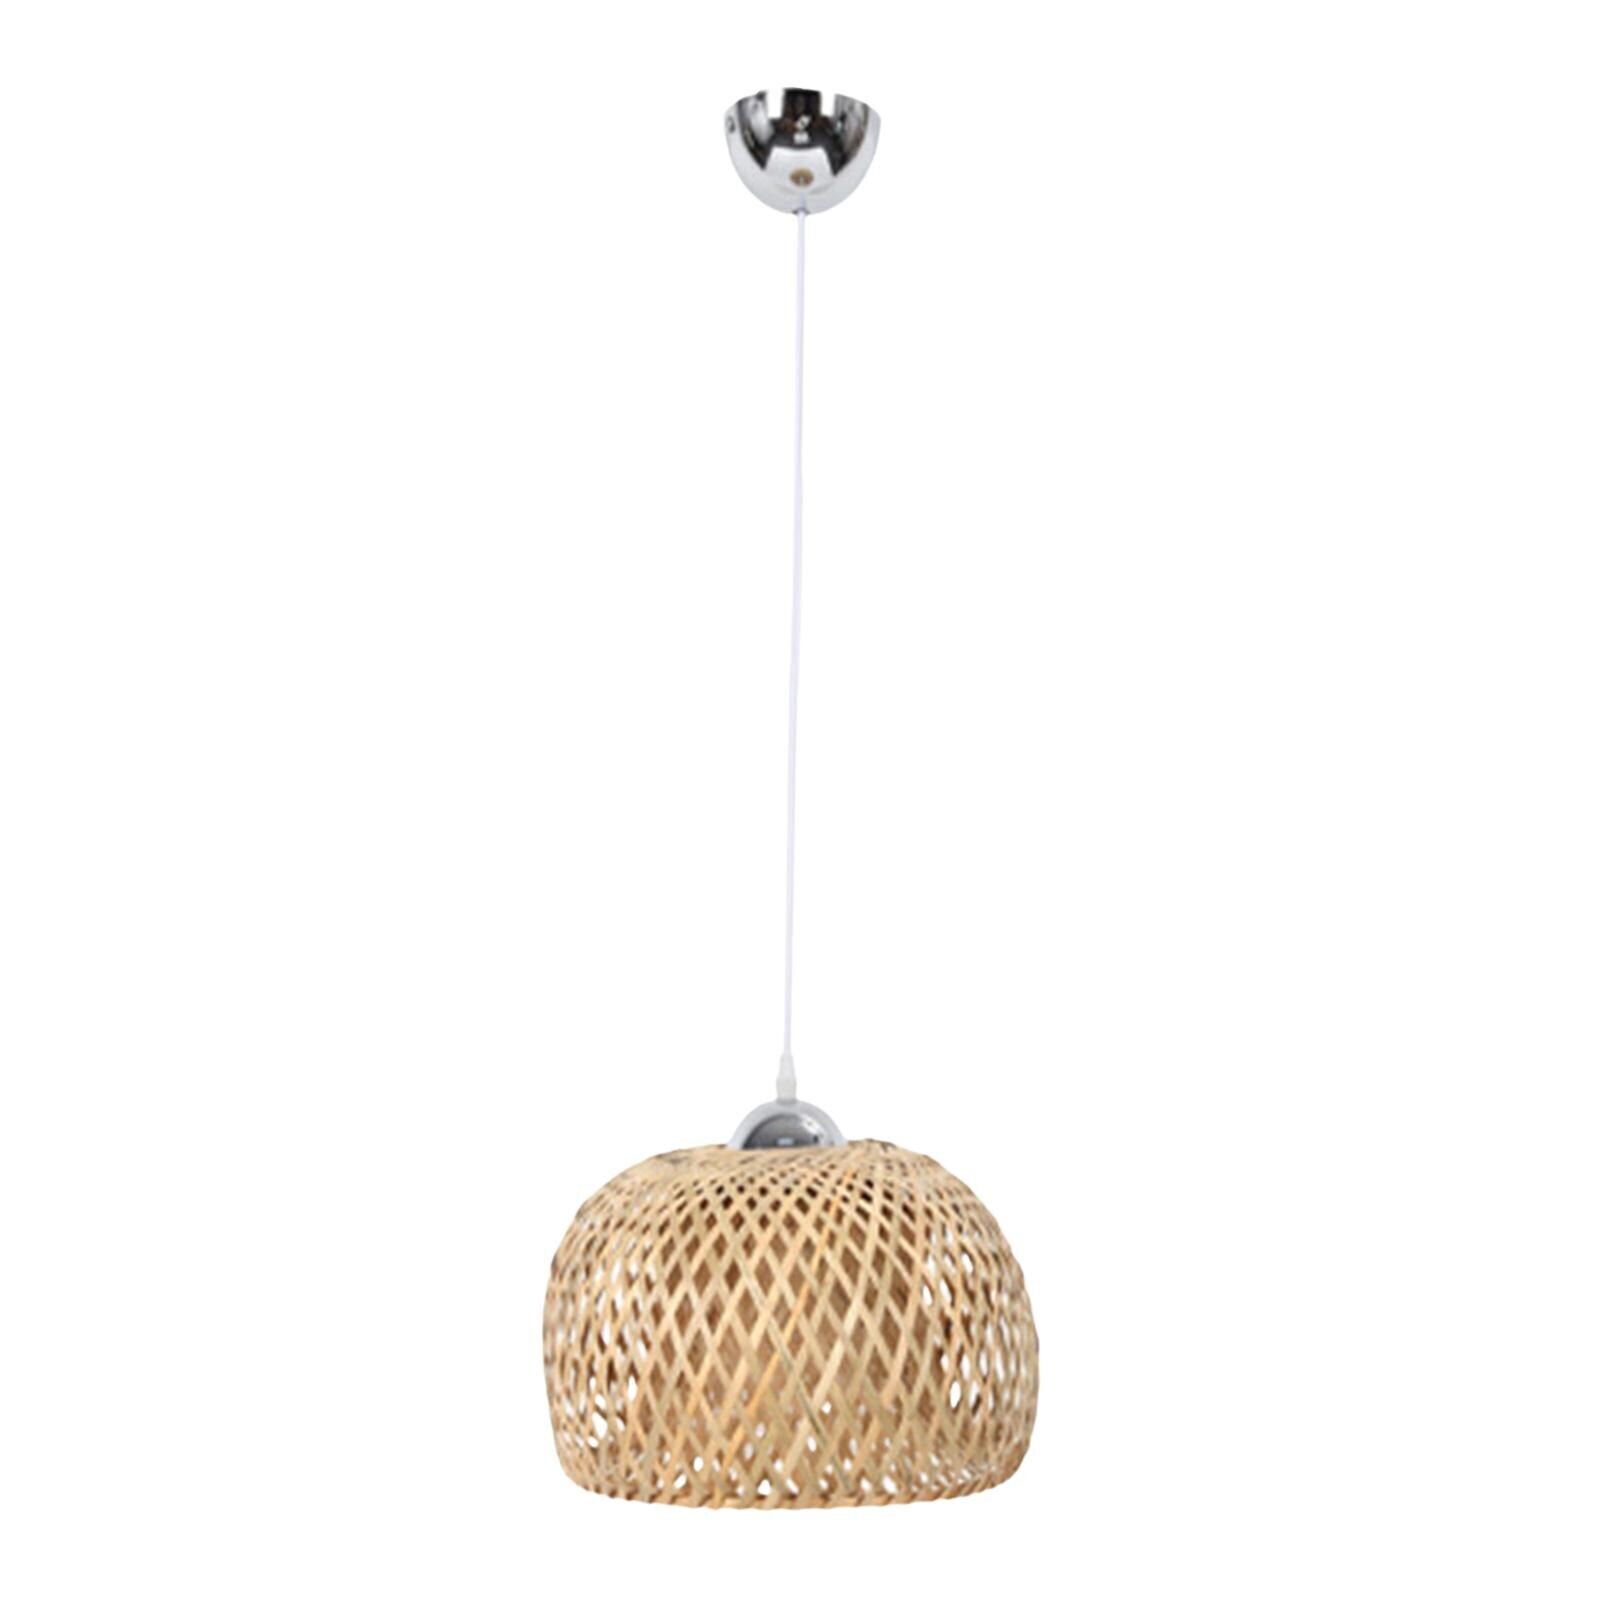 Woven Bamboo Pendant light Fixture Handwoven Lampshade Japanese Style Ceiling Pendant Light for Kitchen Restaurant Bedroom